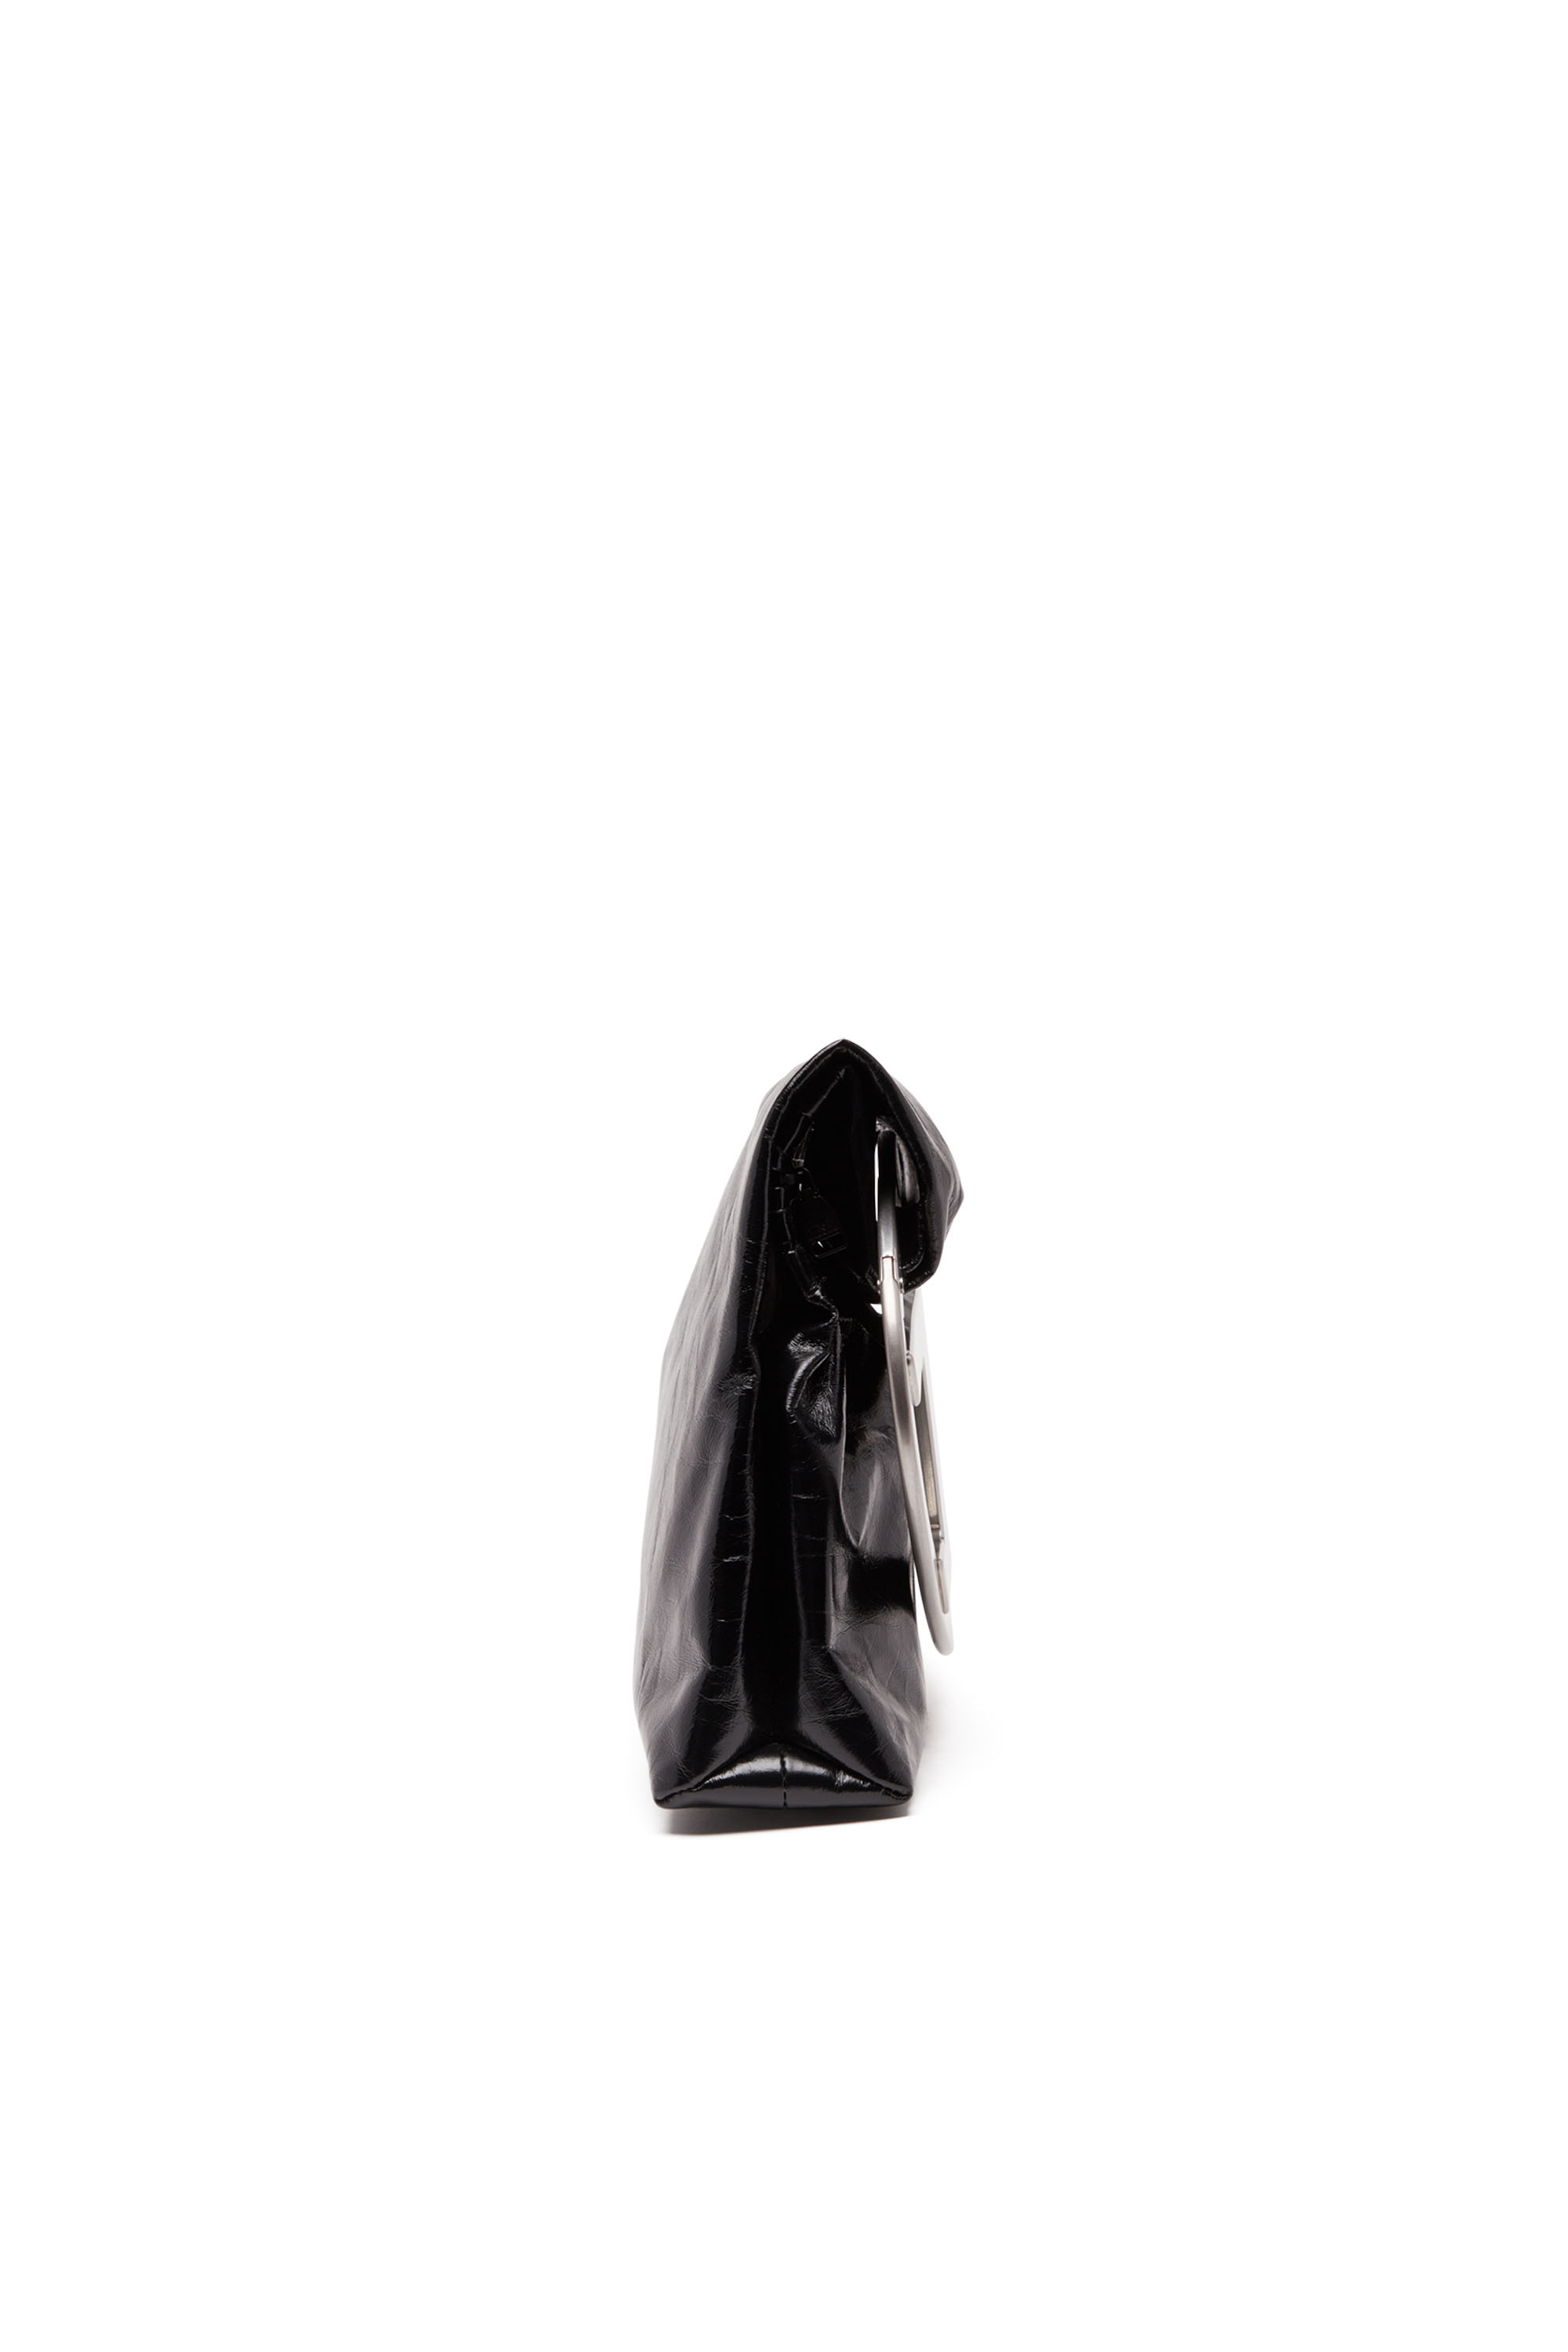 Diesel - BIG-D POUCH, Female Big-D-Clutch bag in crinkled leather in Black - Image 3